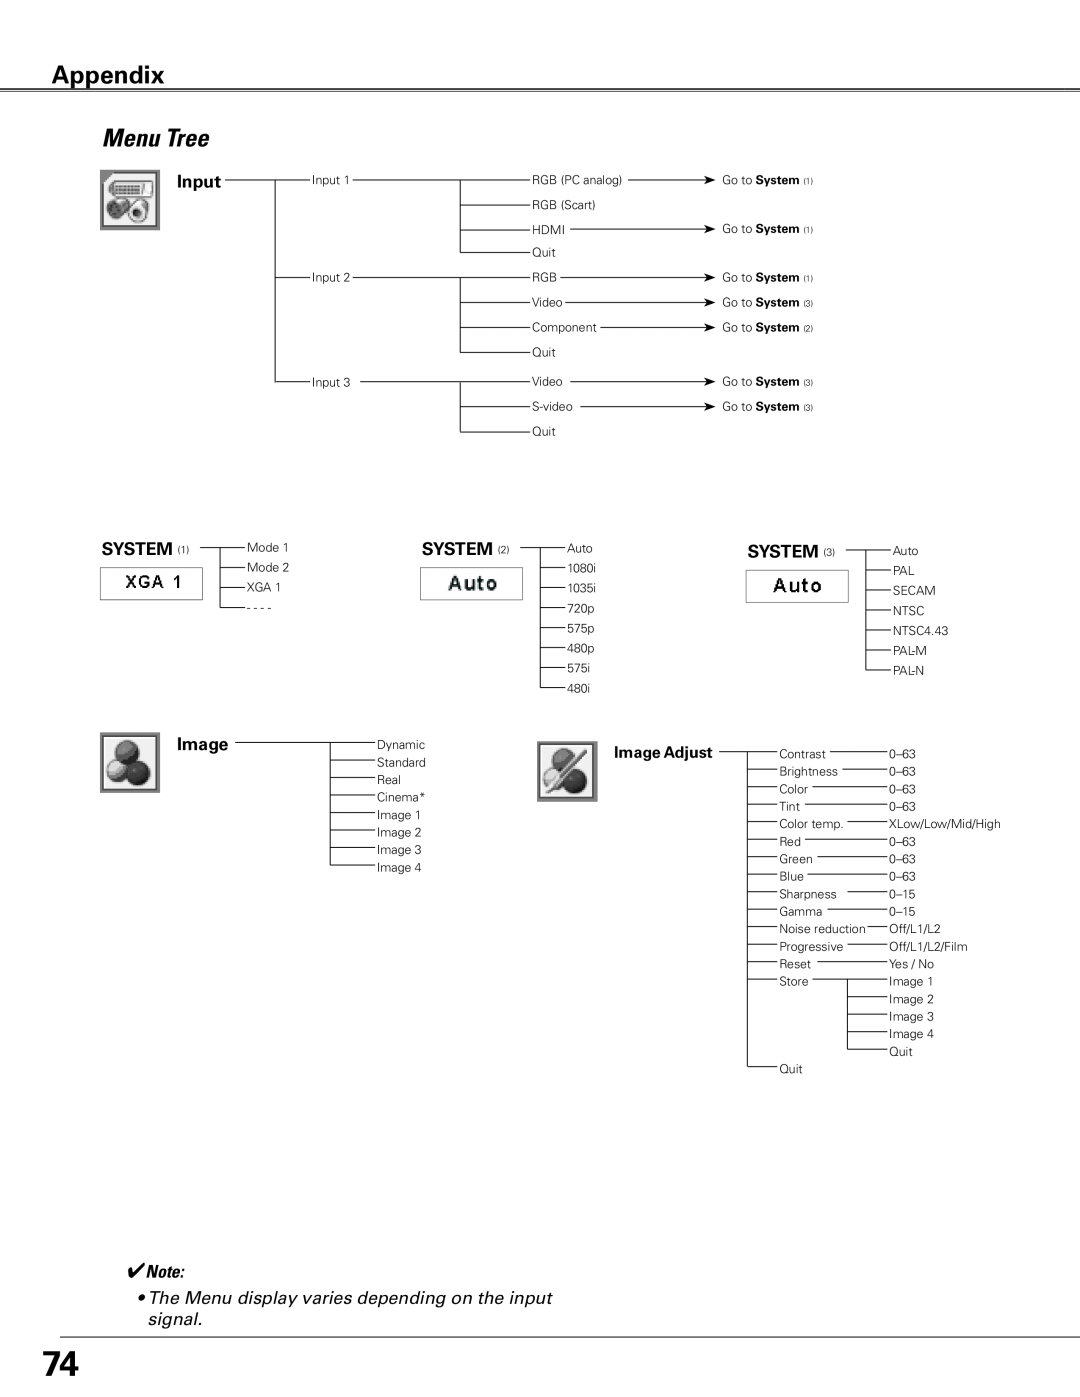 Sanyo WTC500L owner manual Menu Tree, Appendix, Input, System, Image Adjust 